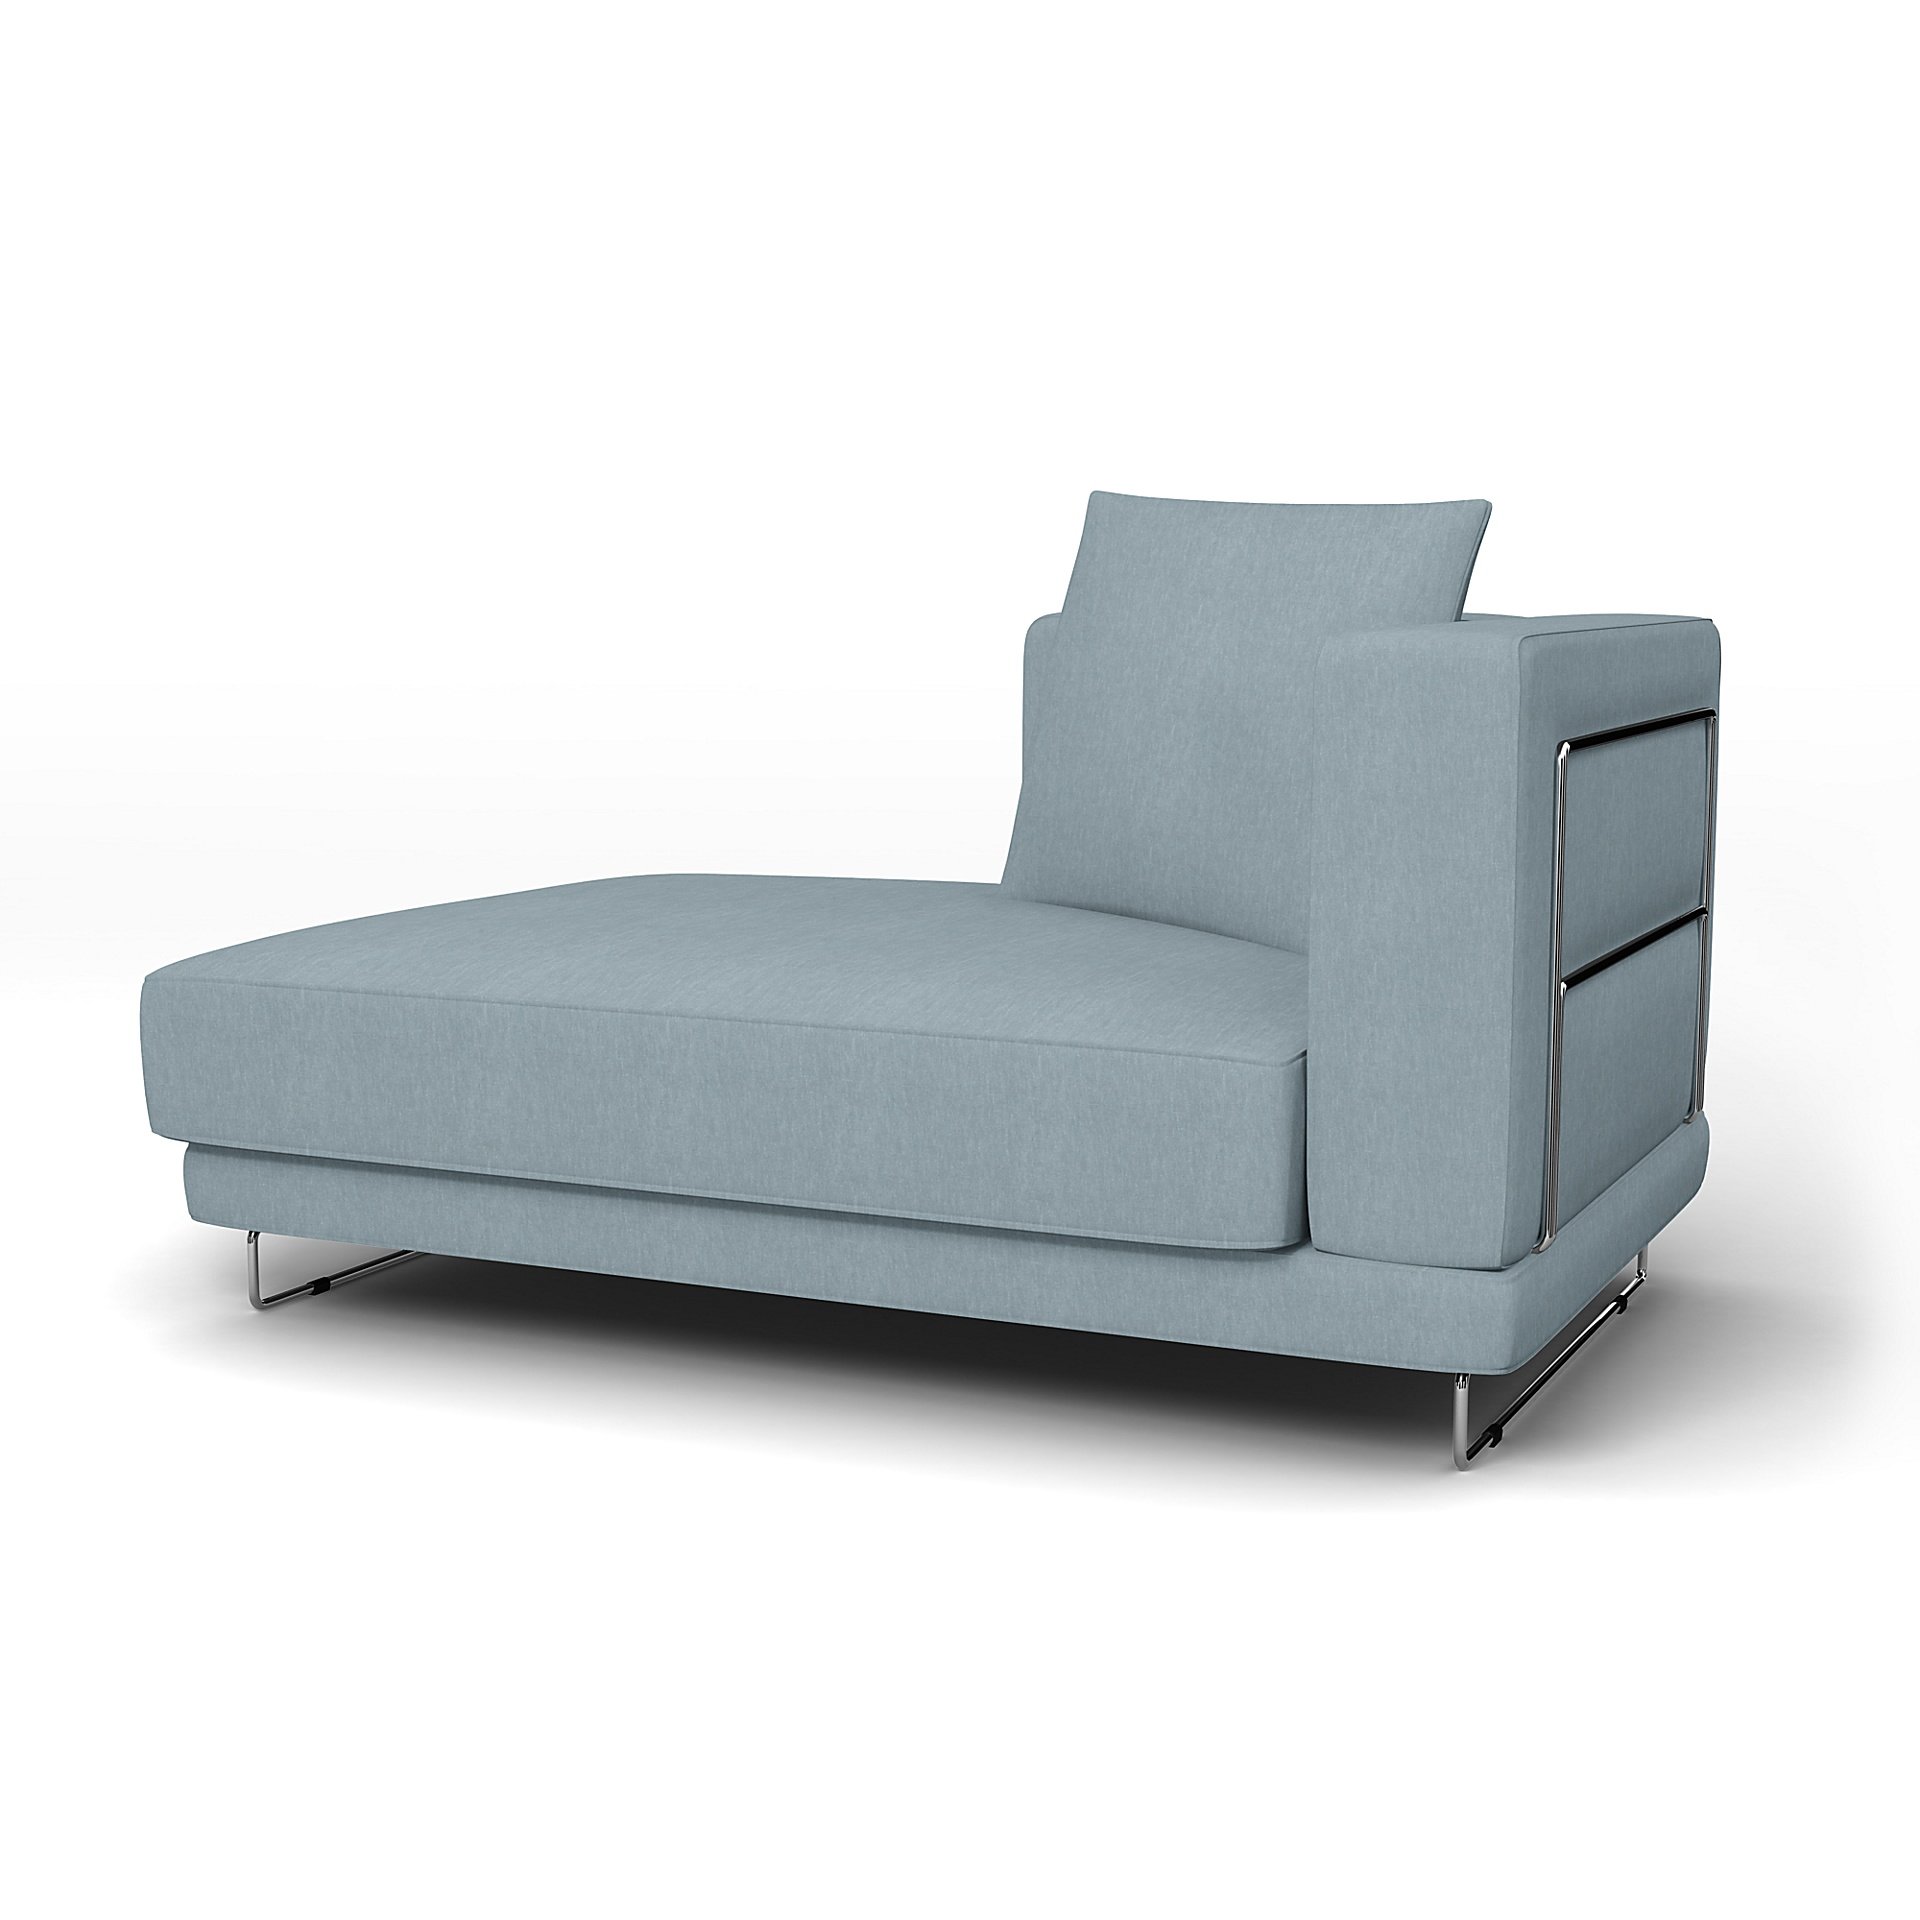 IKEA - Tylosand Chaise with Left Armrest Cover, Dusty Blue, Linen - Bemz